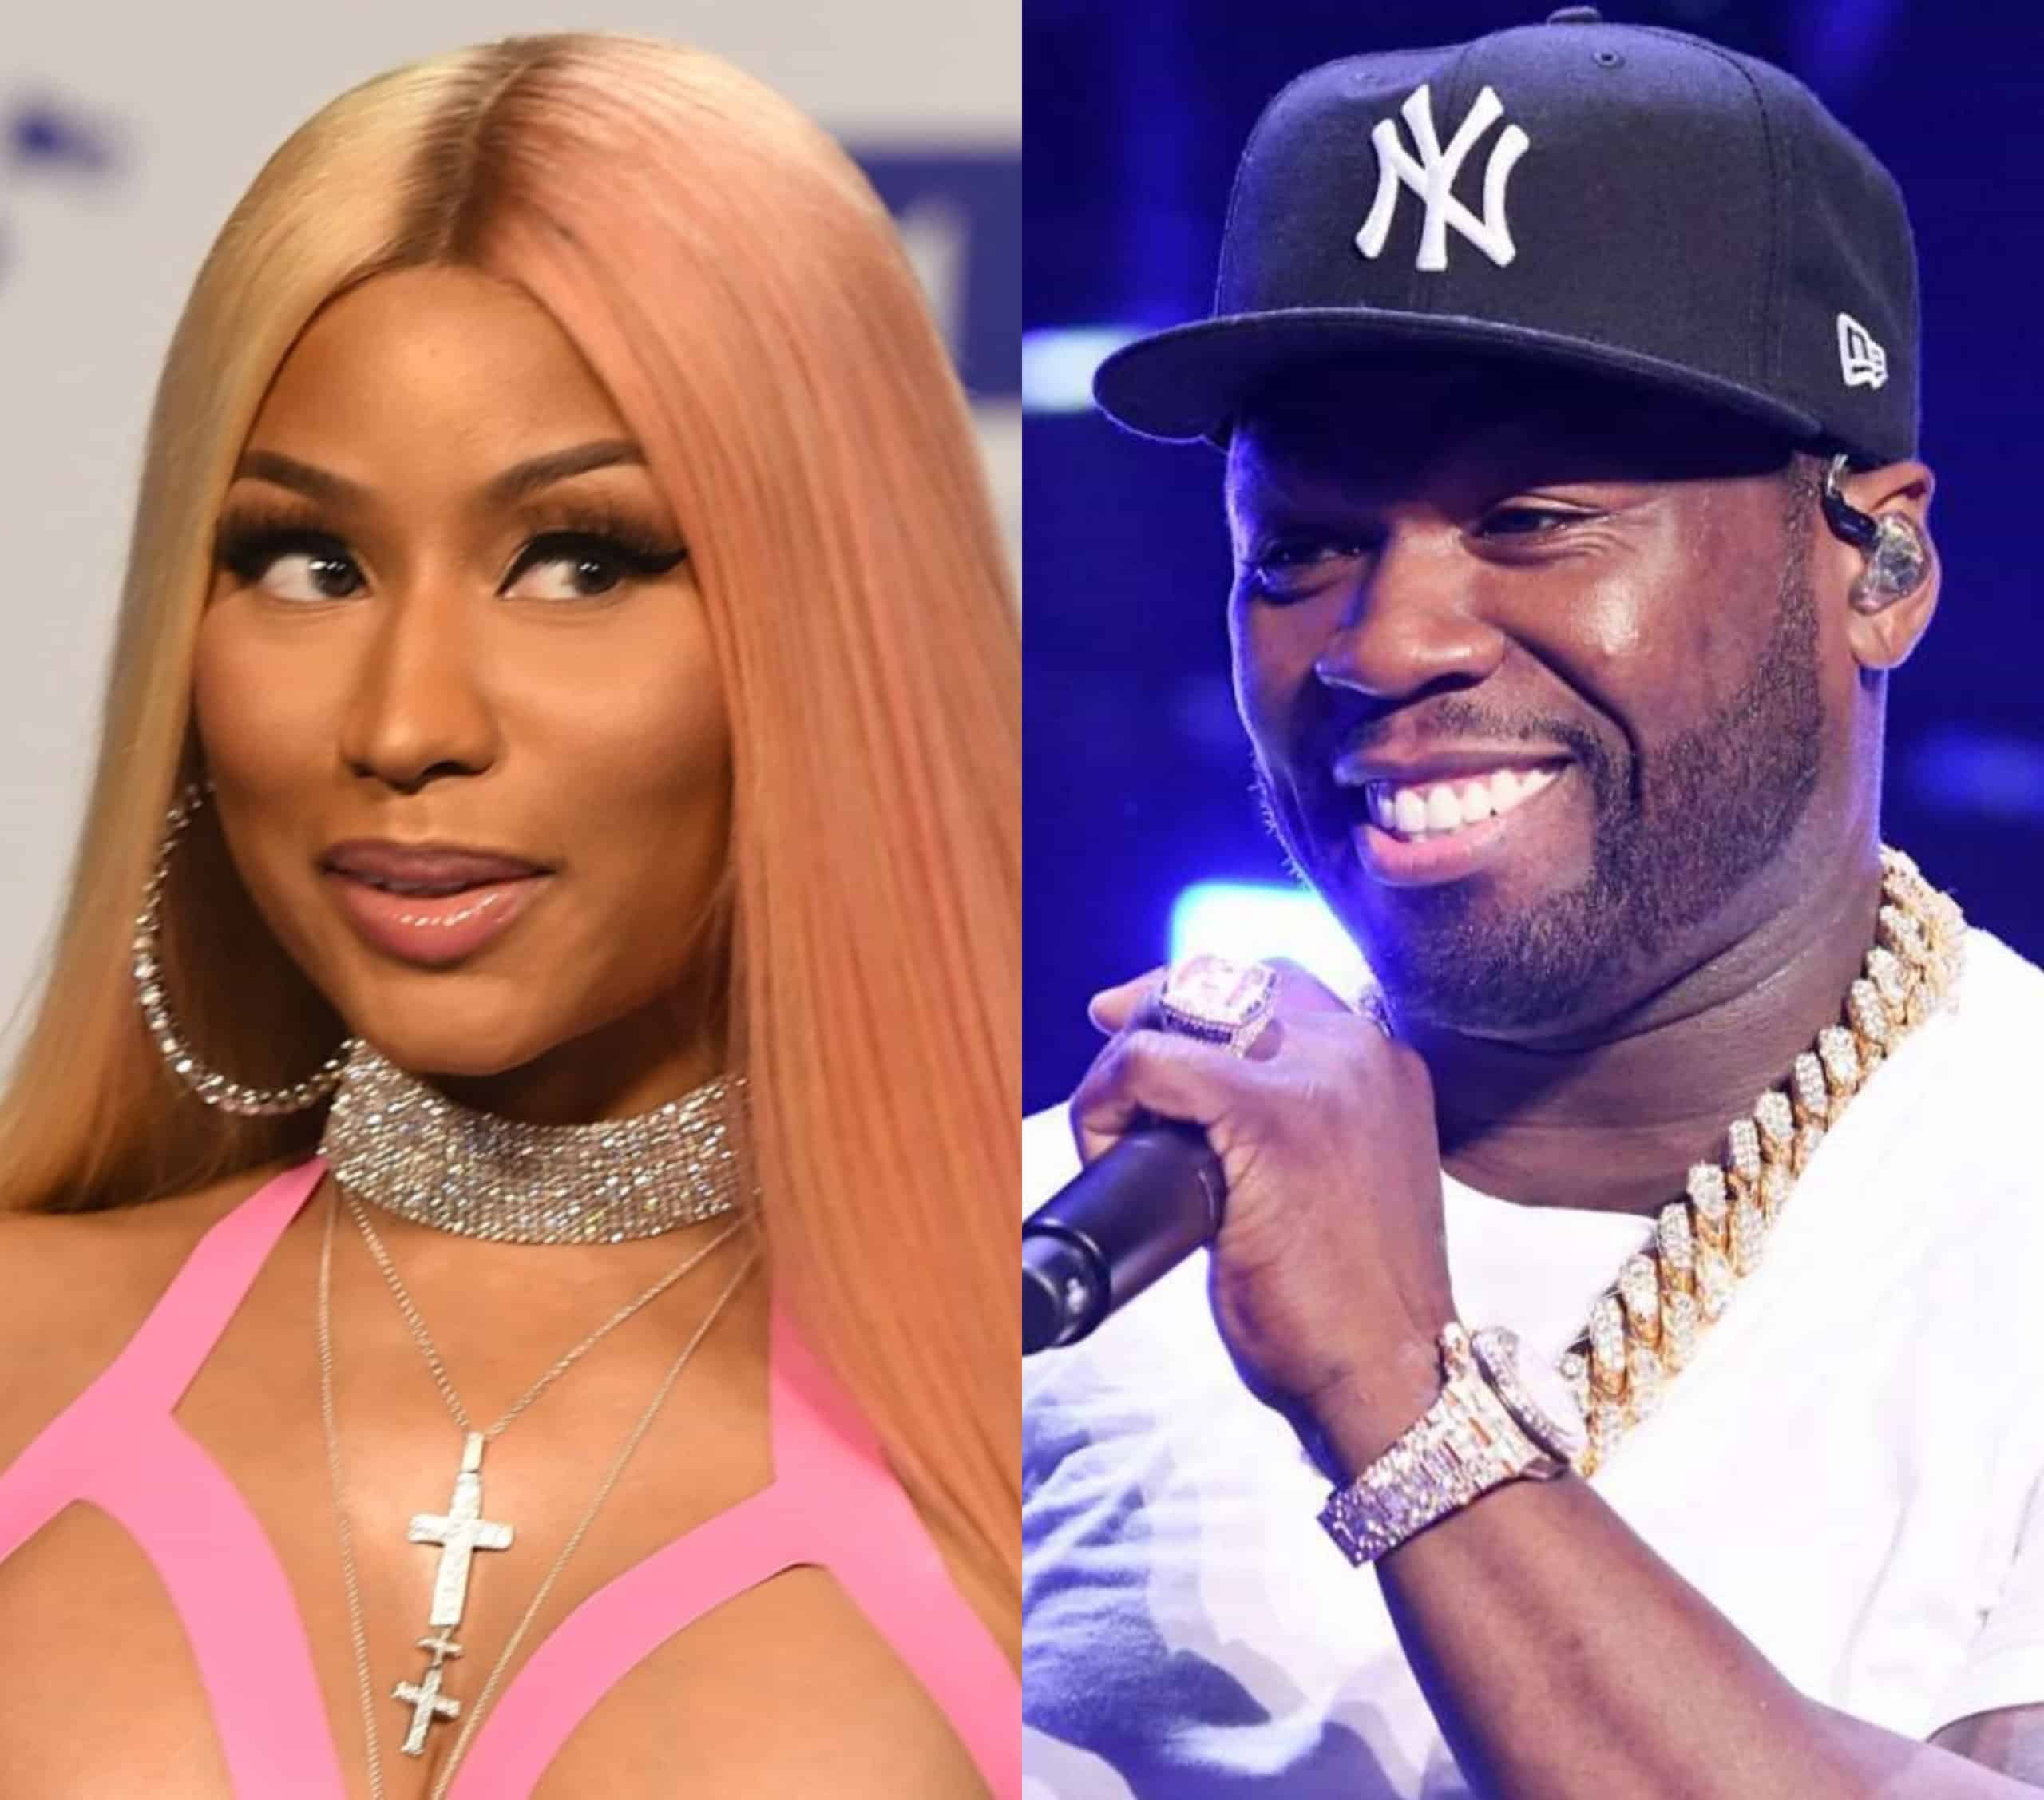 50 Cent Responds After Nicki Minaj Applauds Him For His TV Success